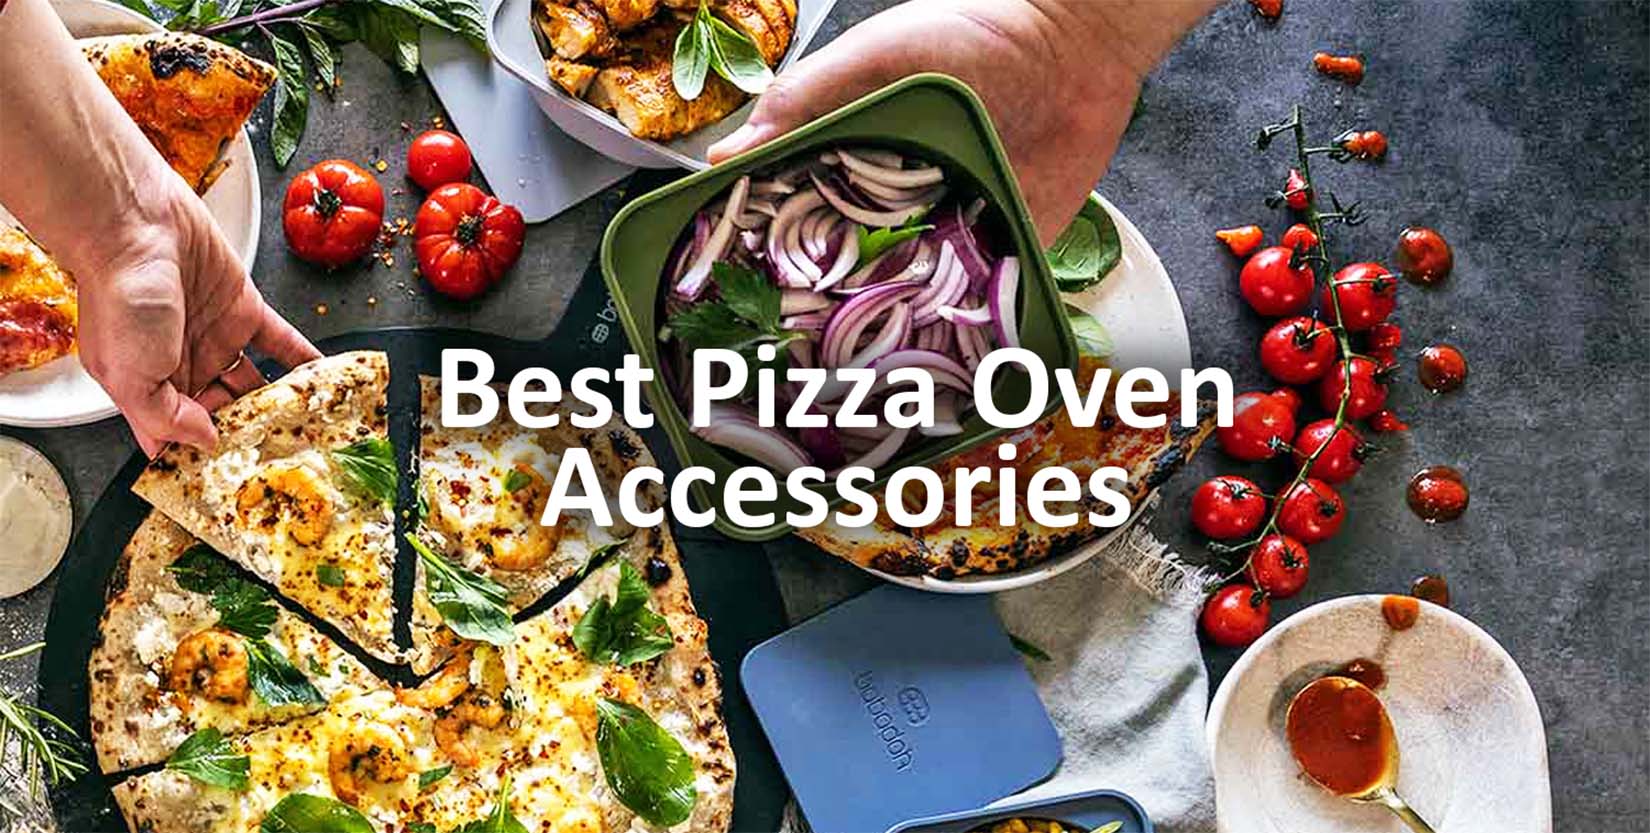 Best Pizza Oven Accessories - Igneus pizza ovens